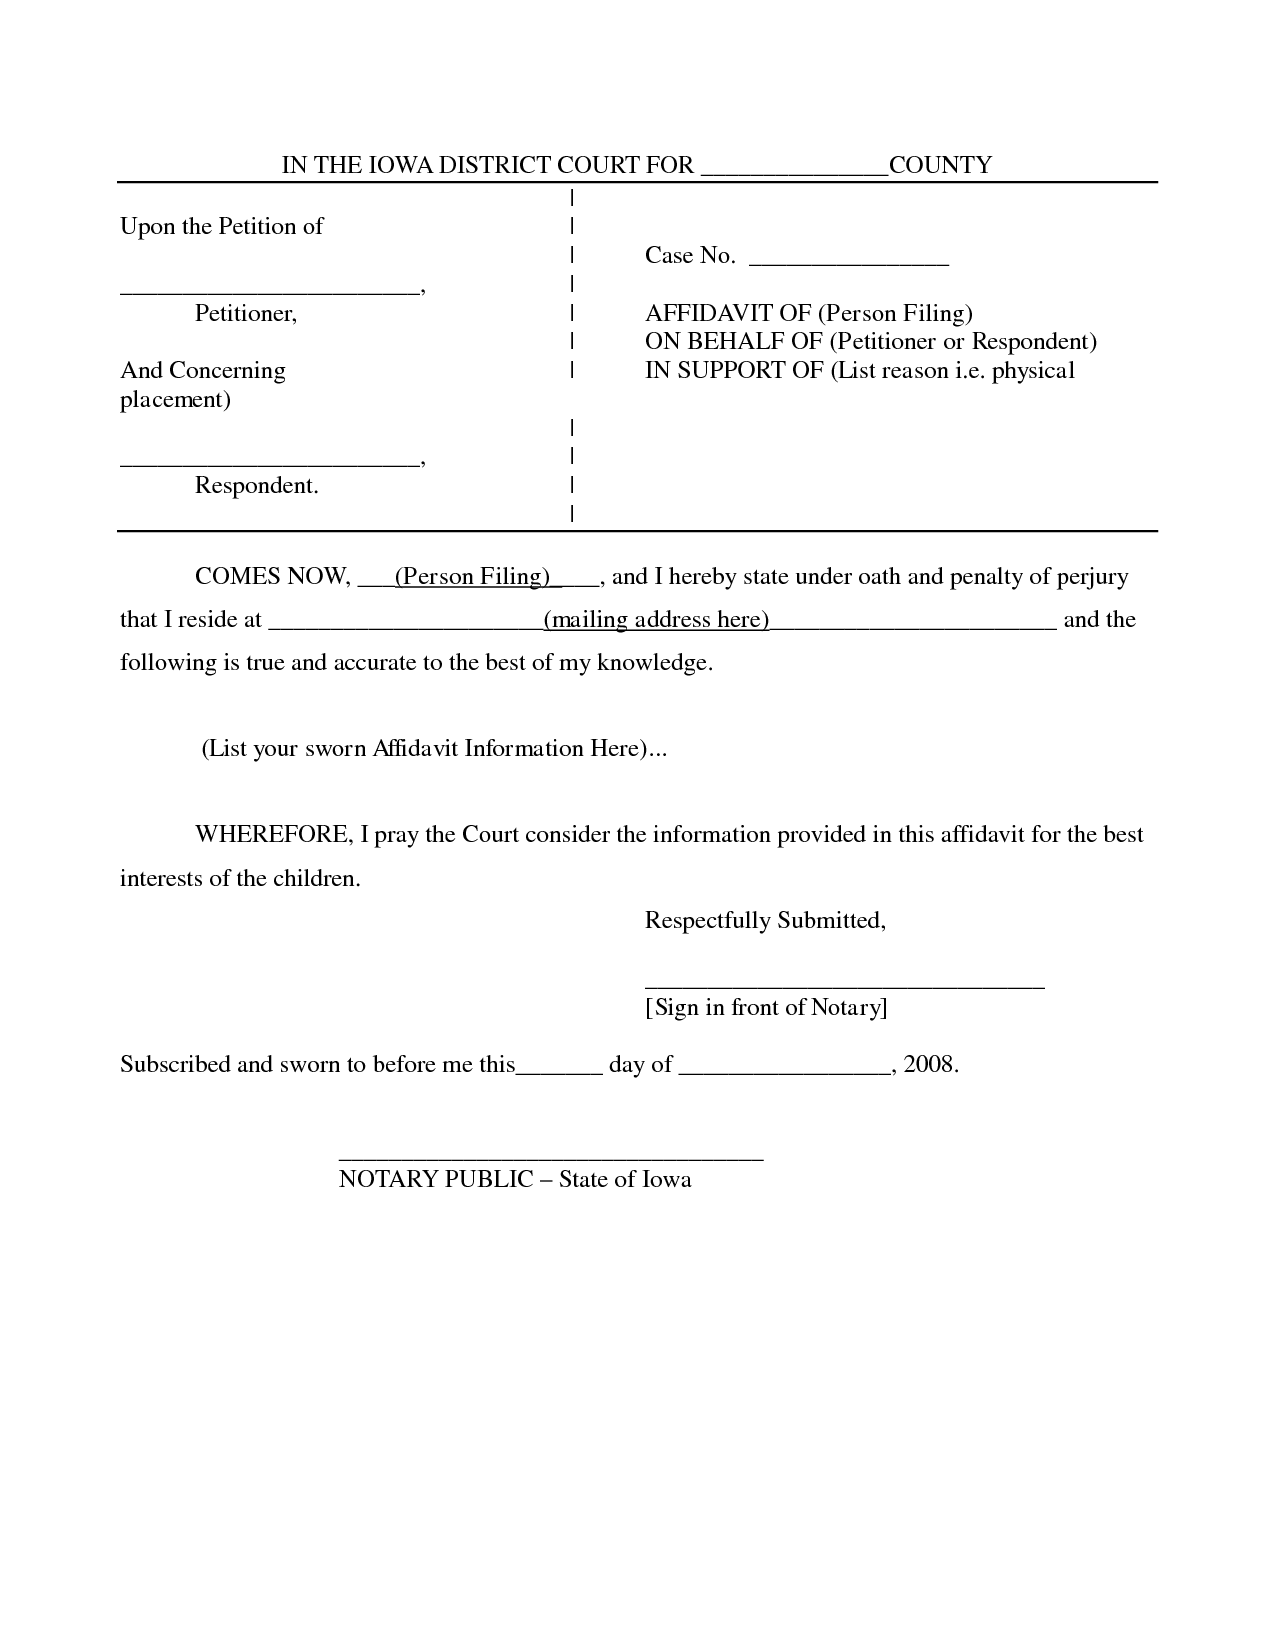 Sample Affidavit Free Printable Documents